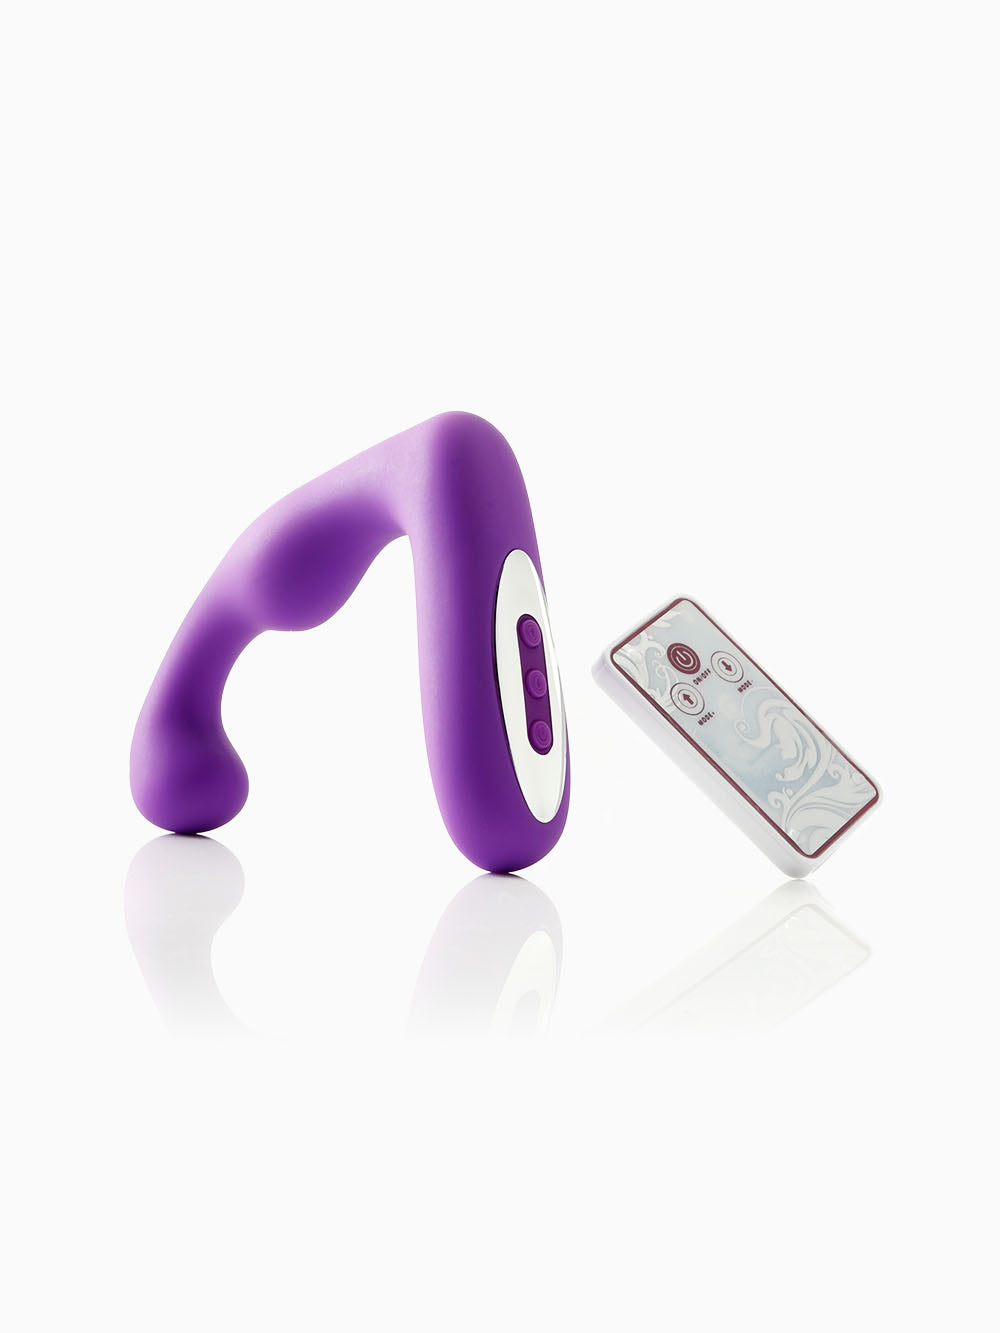 Pillow Talk Wearable G Spot & Clitoral Vibrator Purple, 3.75 Inches